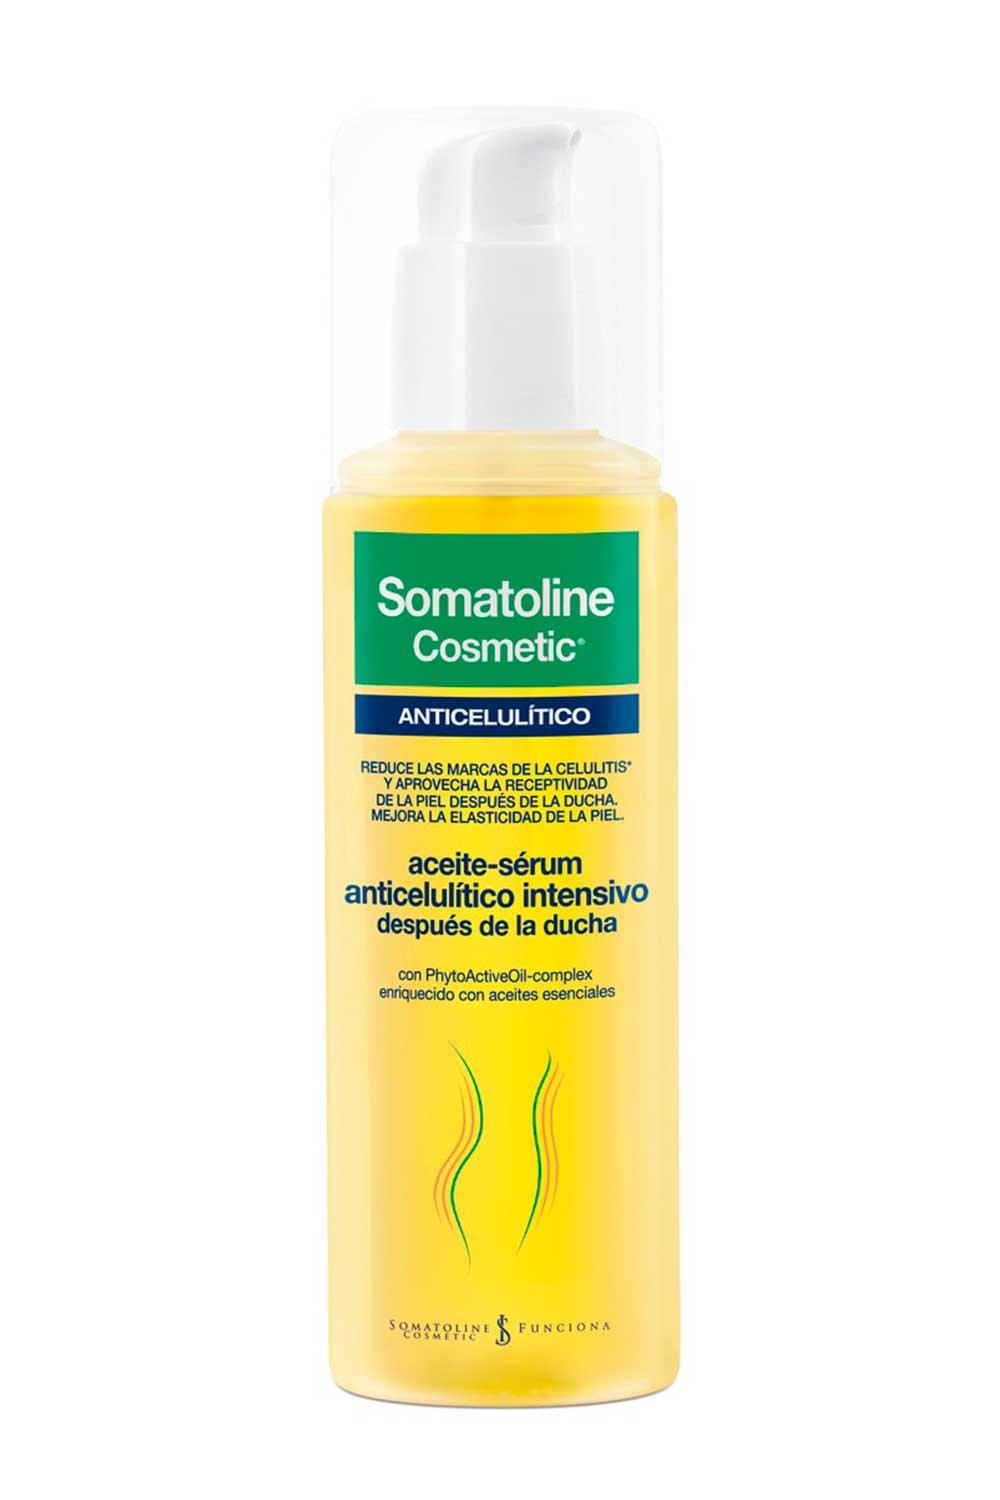 Ssomatoline. Aceite Sérum Anticelulítico 125 ml Somatoline